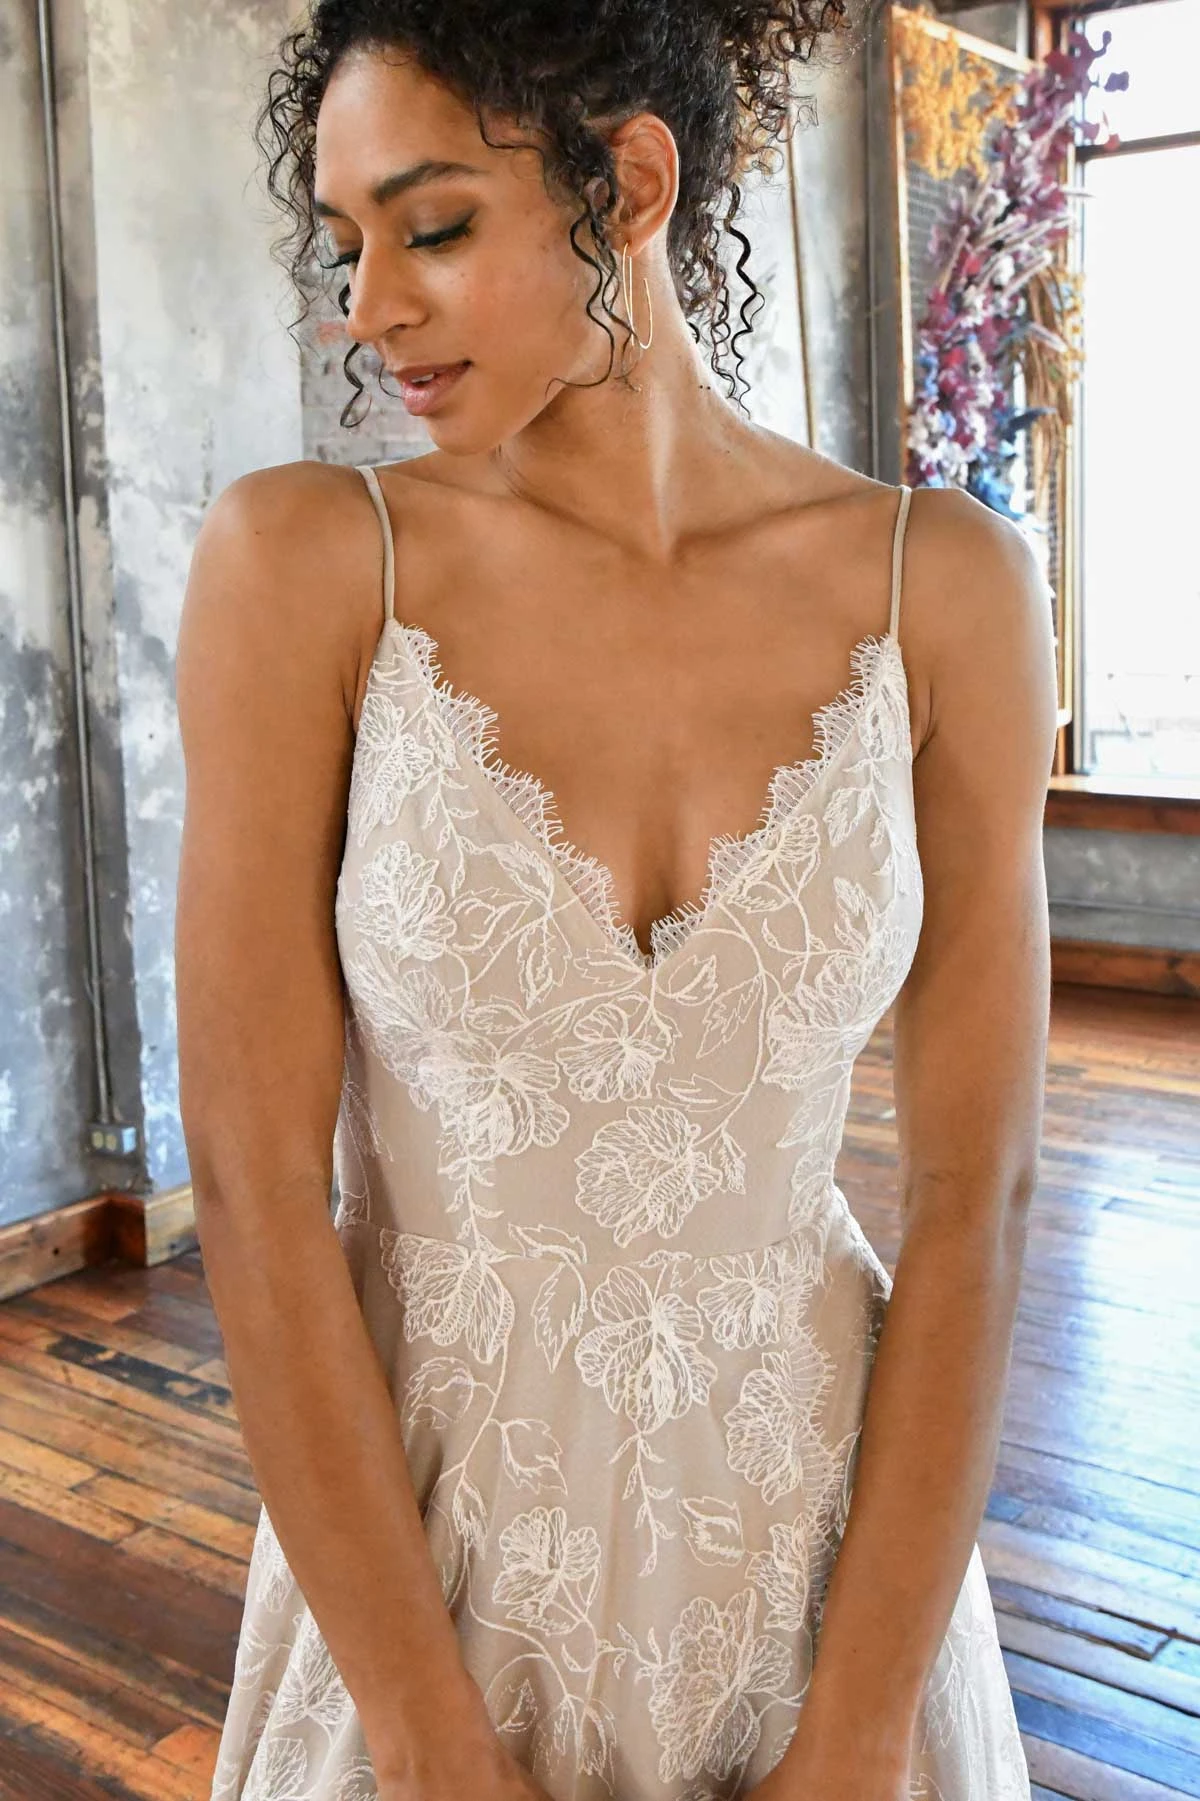 luna Romantic Boho Lace A-Line Slip Wedding Dress with Spaghetti Straps  by All Who Wander